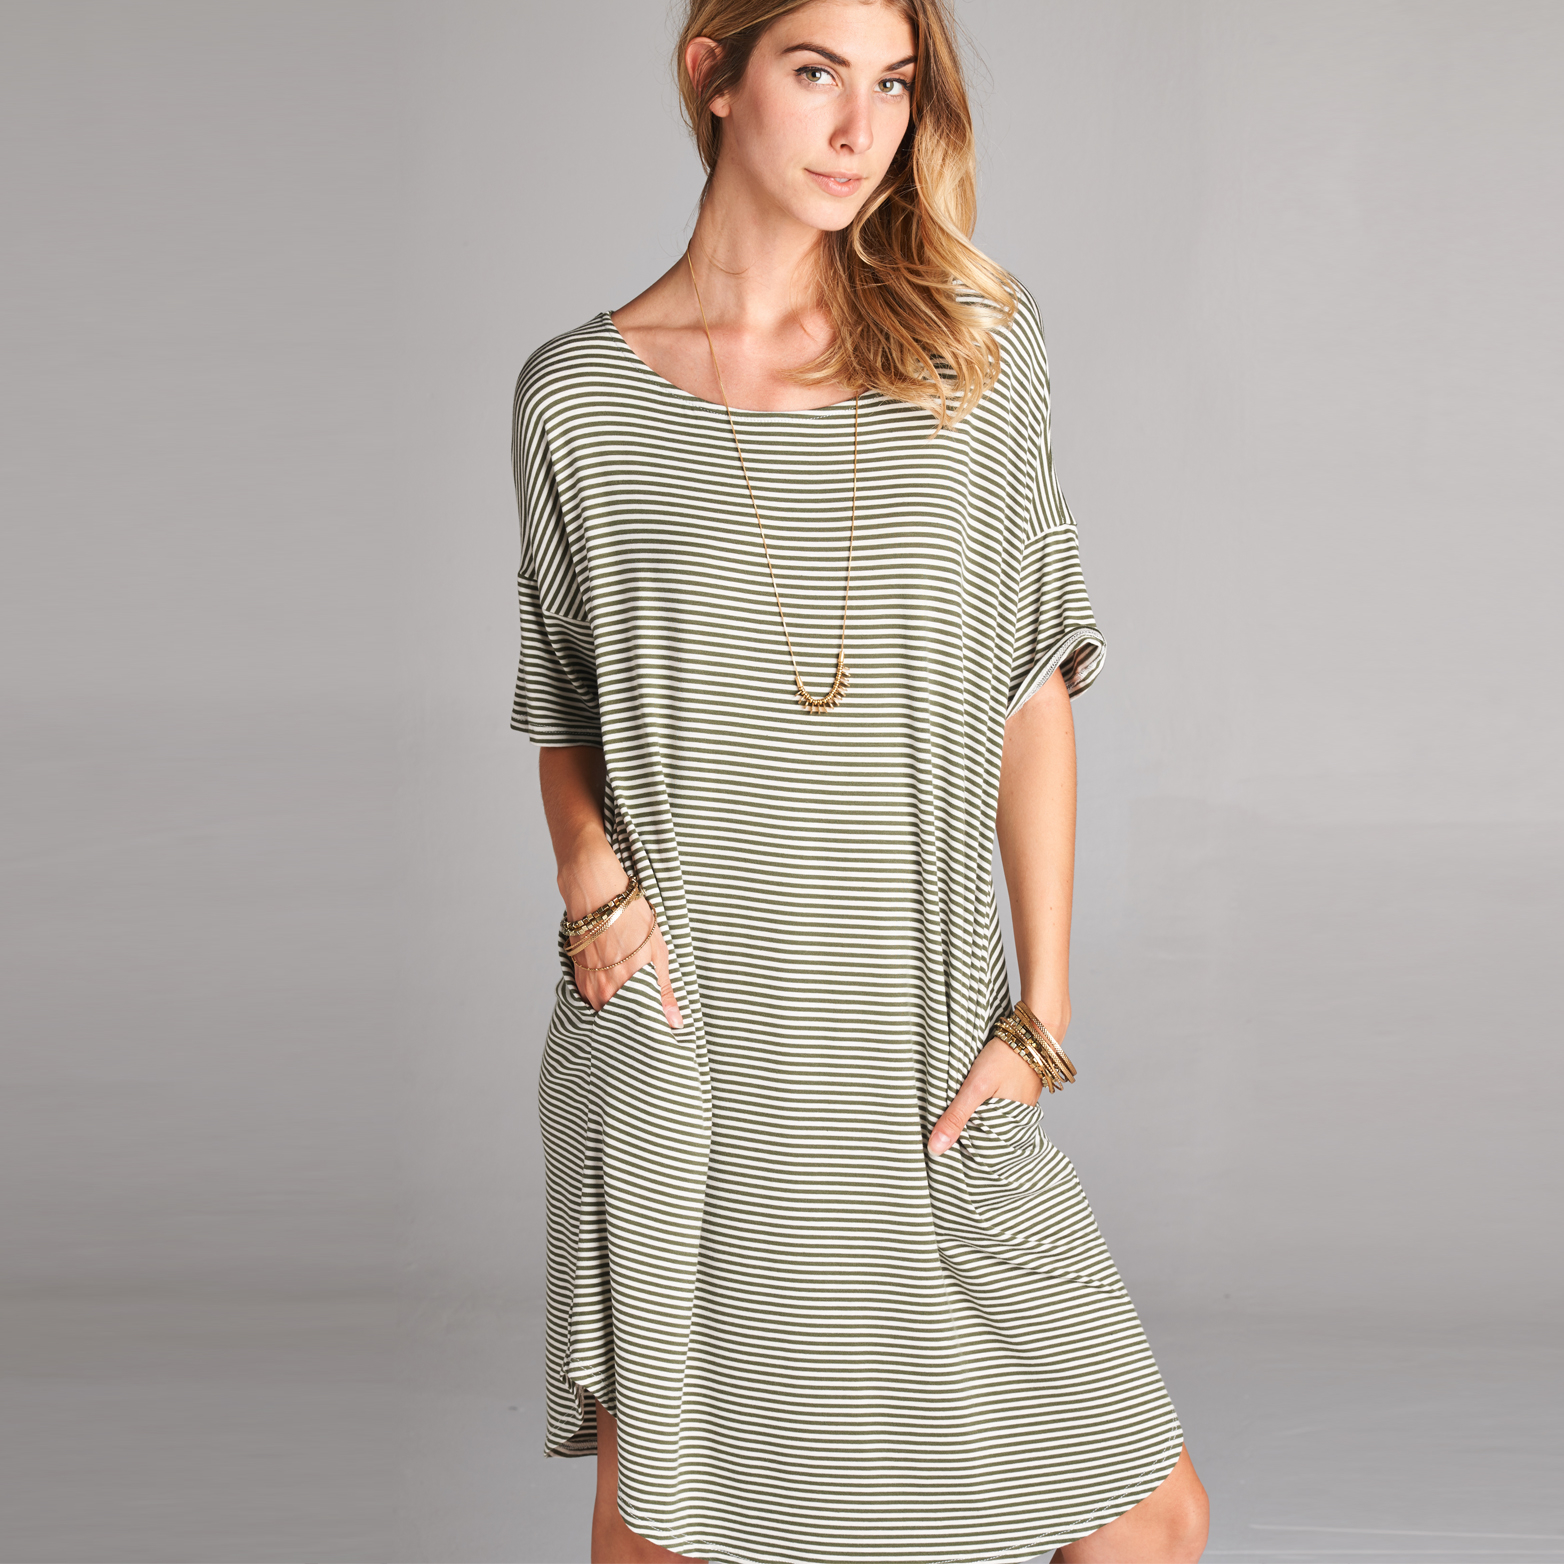 Relaxed Fit Pocket Dress - Olive/White Stripe, Medium (10-12)